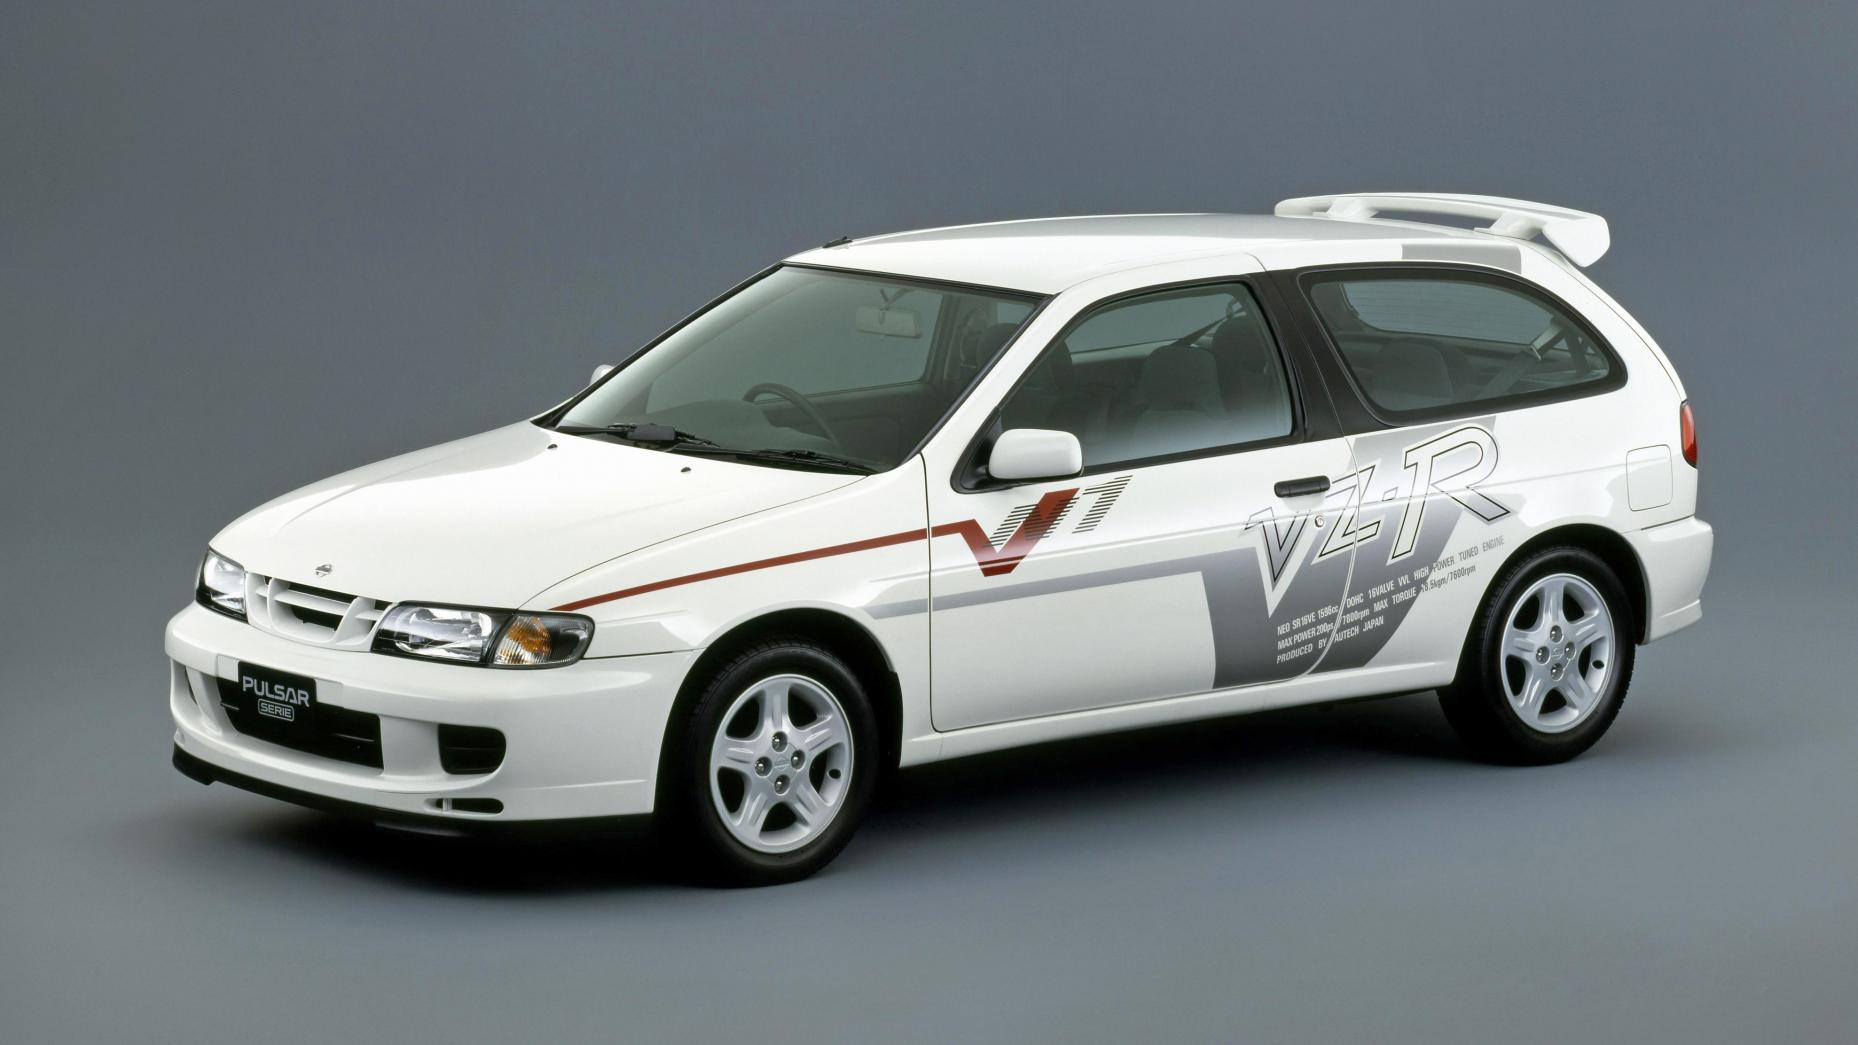 1. Nissan Pulsar VZ-R N1